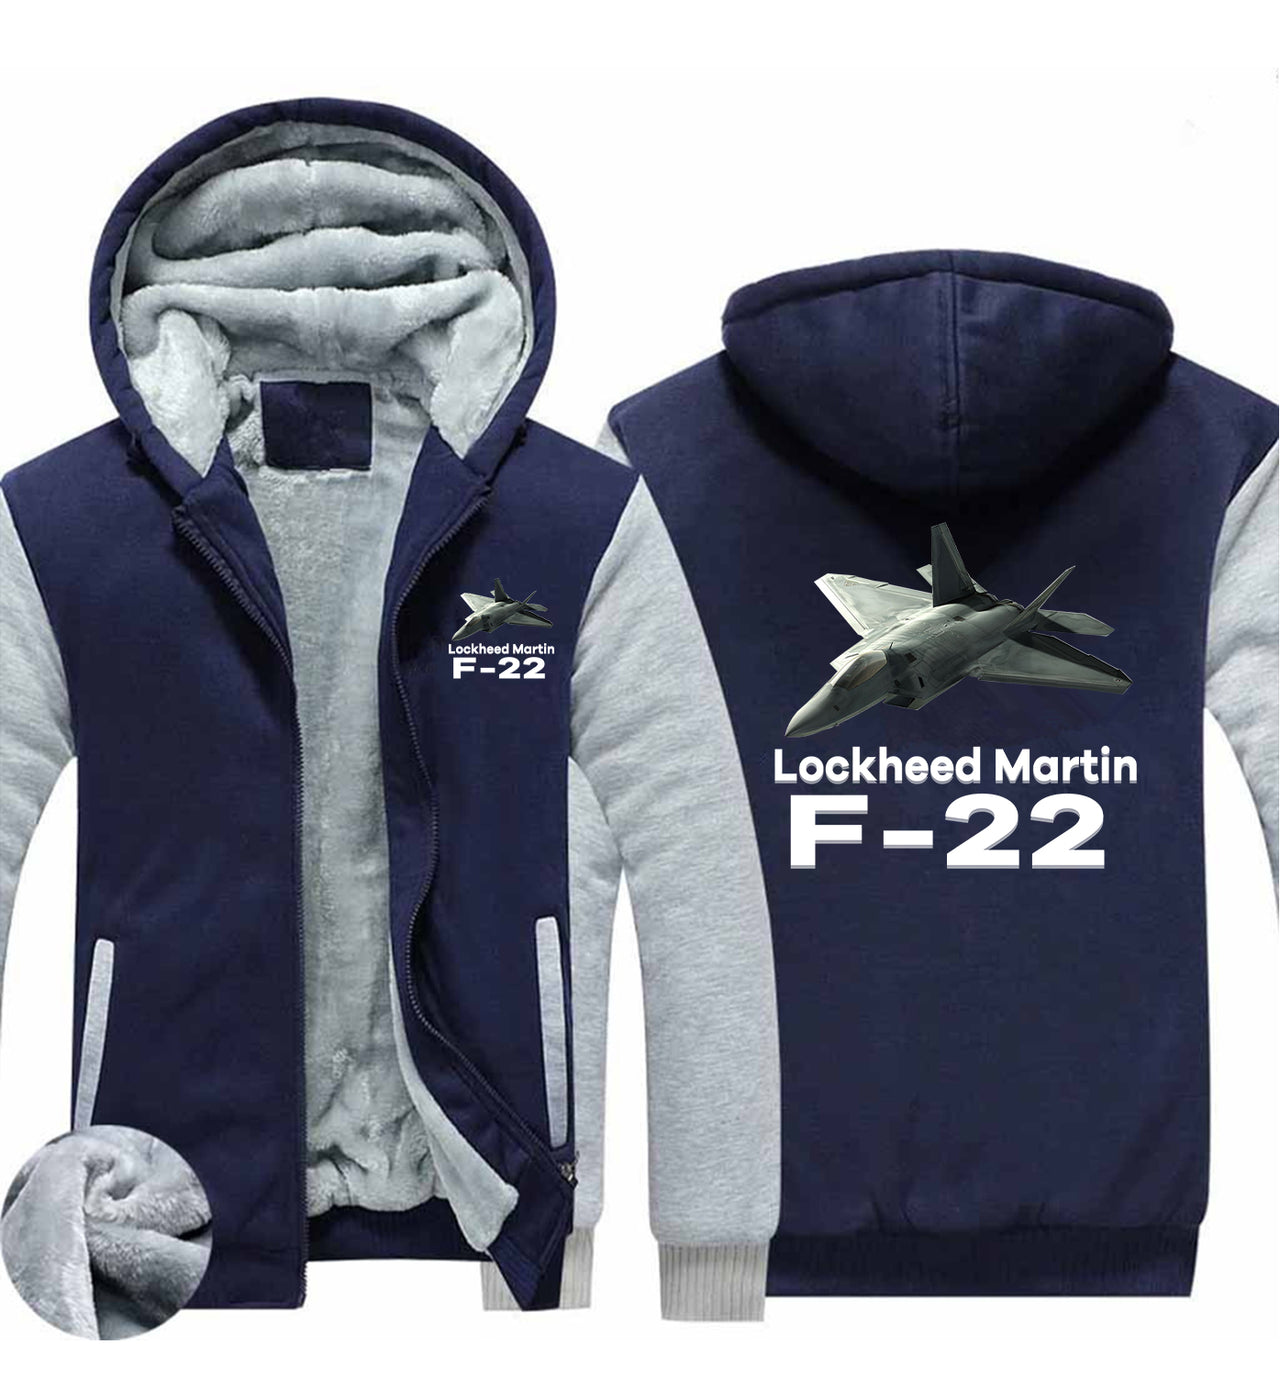 The Lockheed Martin F22 Designed Zipped Sweatshirts